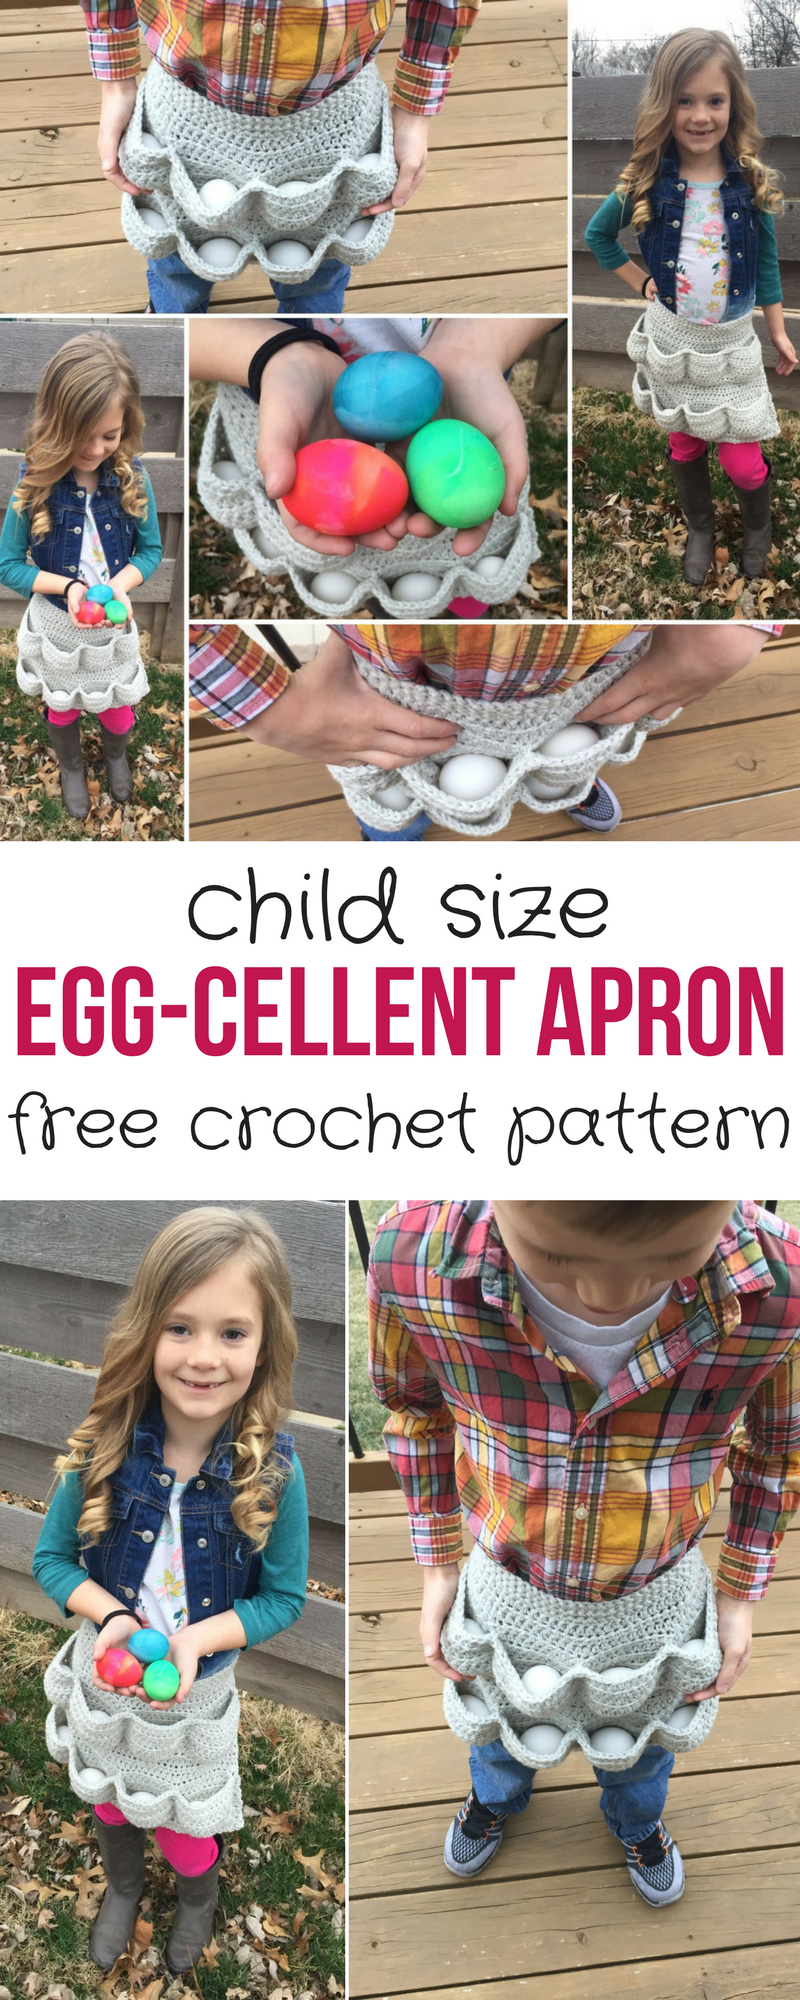 Crochet Apron Pattern Free Egg Cellent Child Size Apron Free Crochet Pattern Best Of Heart